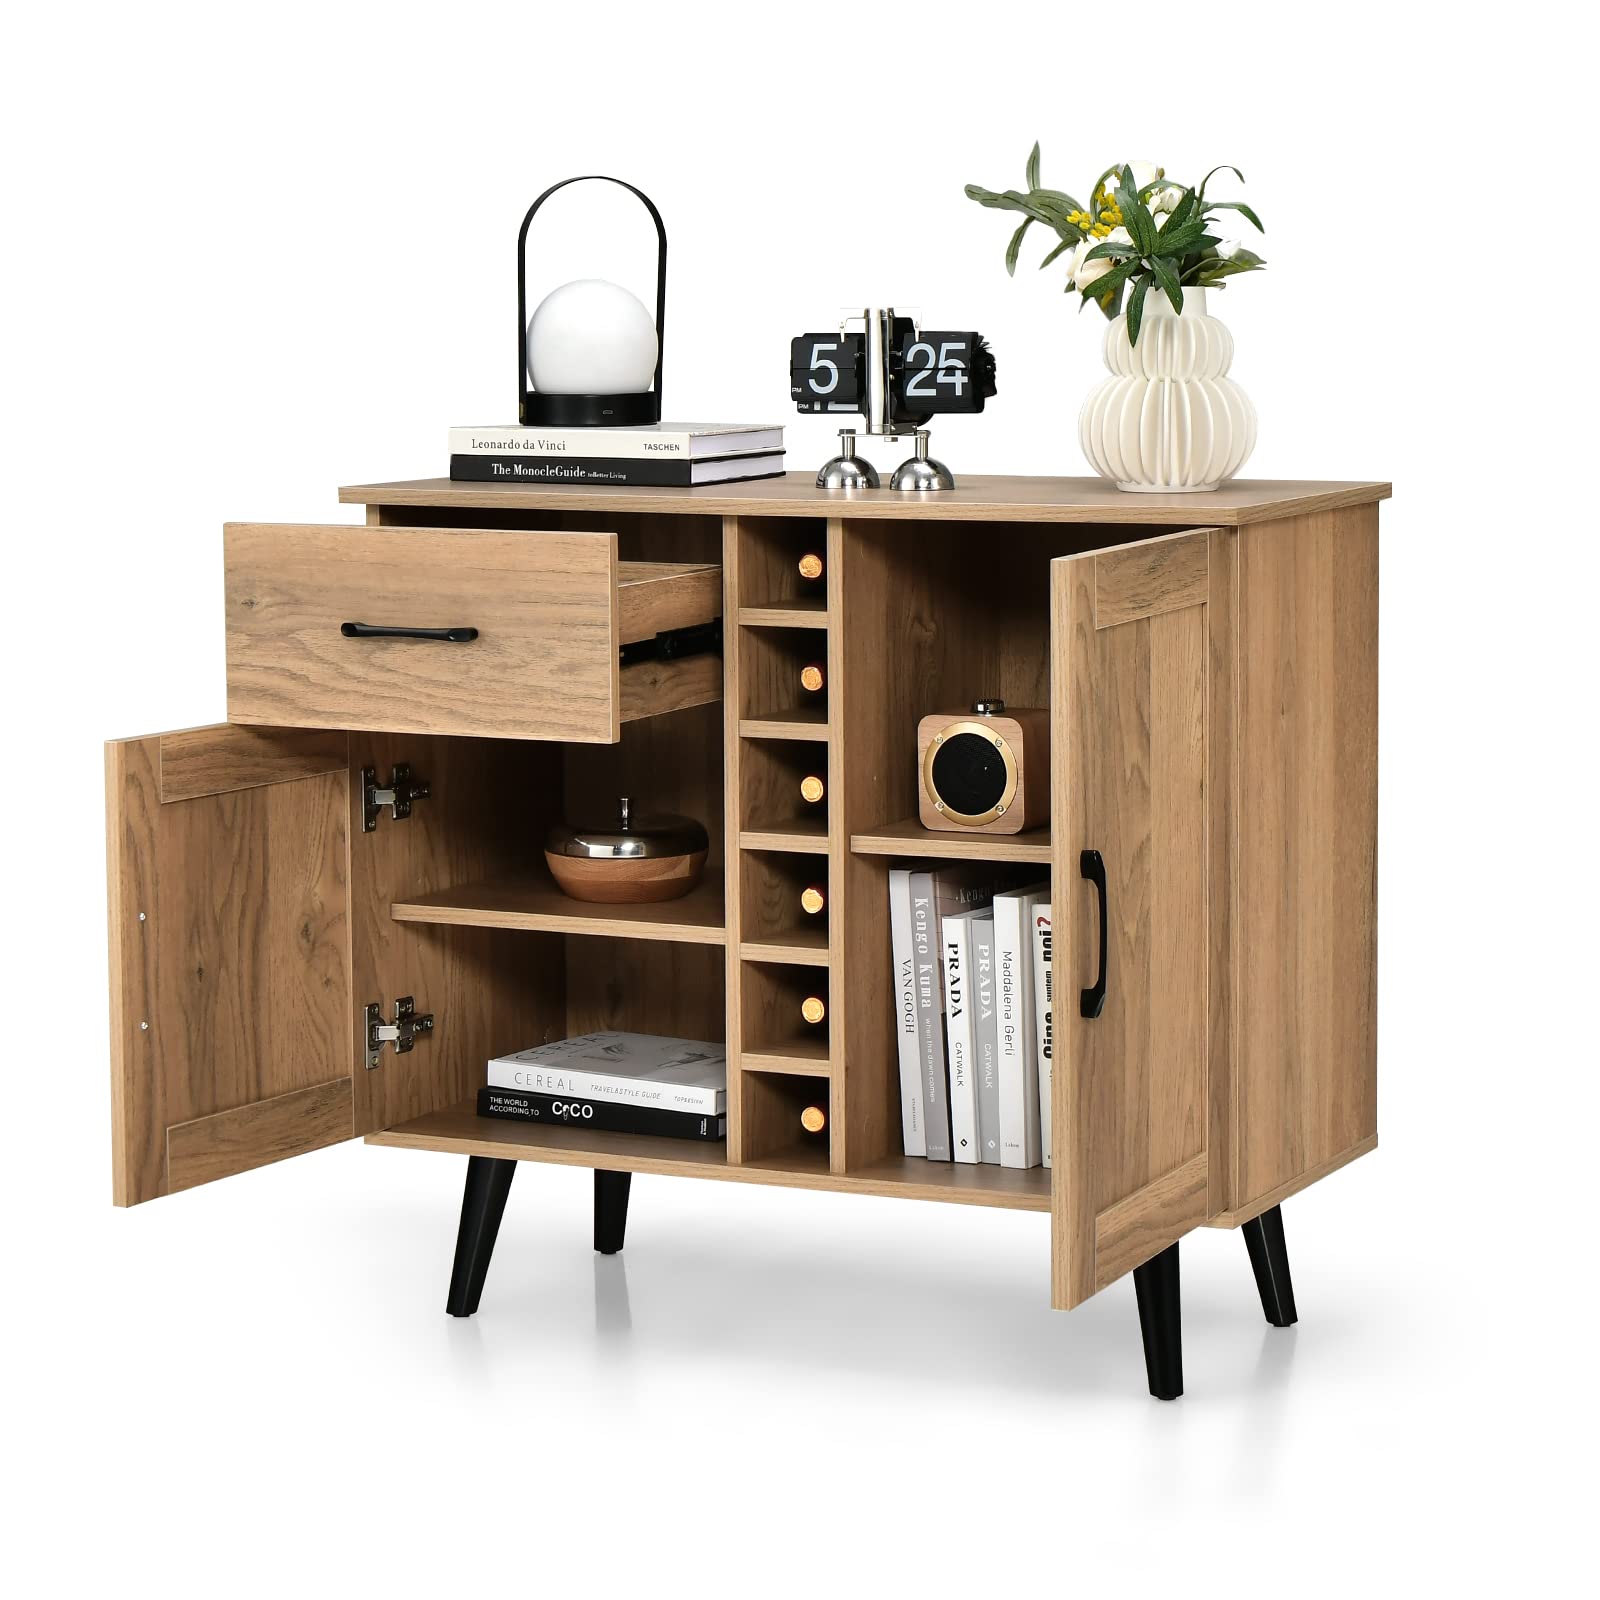 Giantex Buffet Sideboard Storage Cabinet - Wood Pantry Cupboard with 6-Bottle Wine Rack, Large Drawer (Oak)